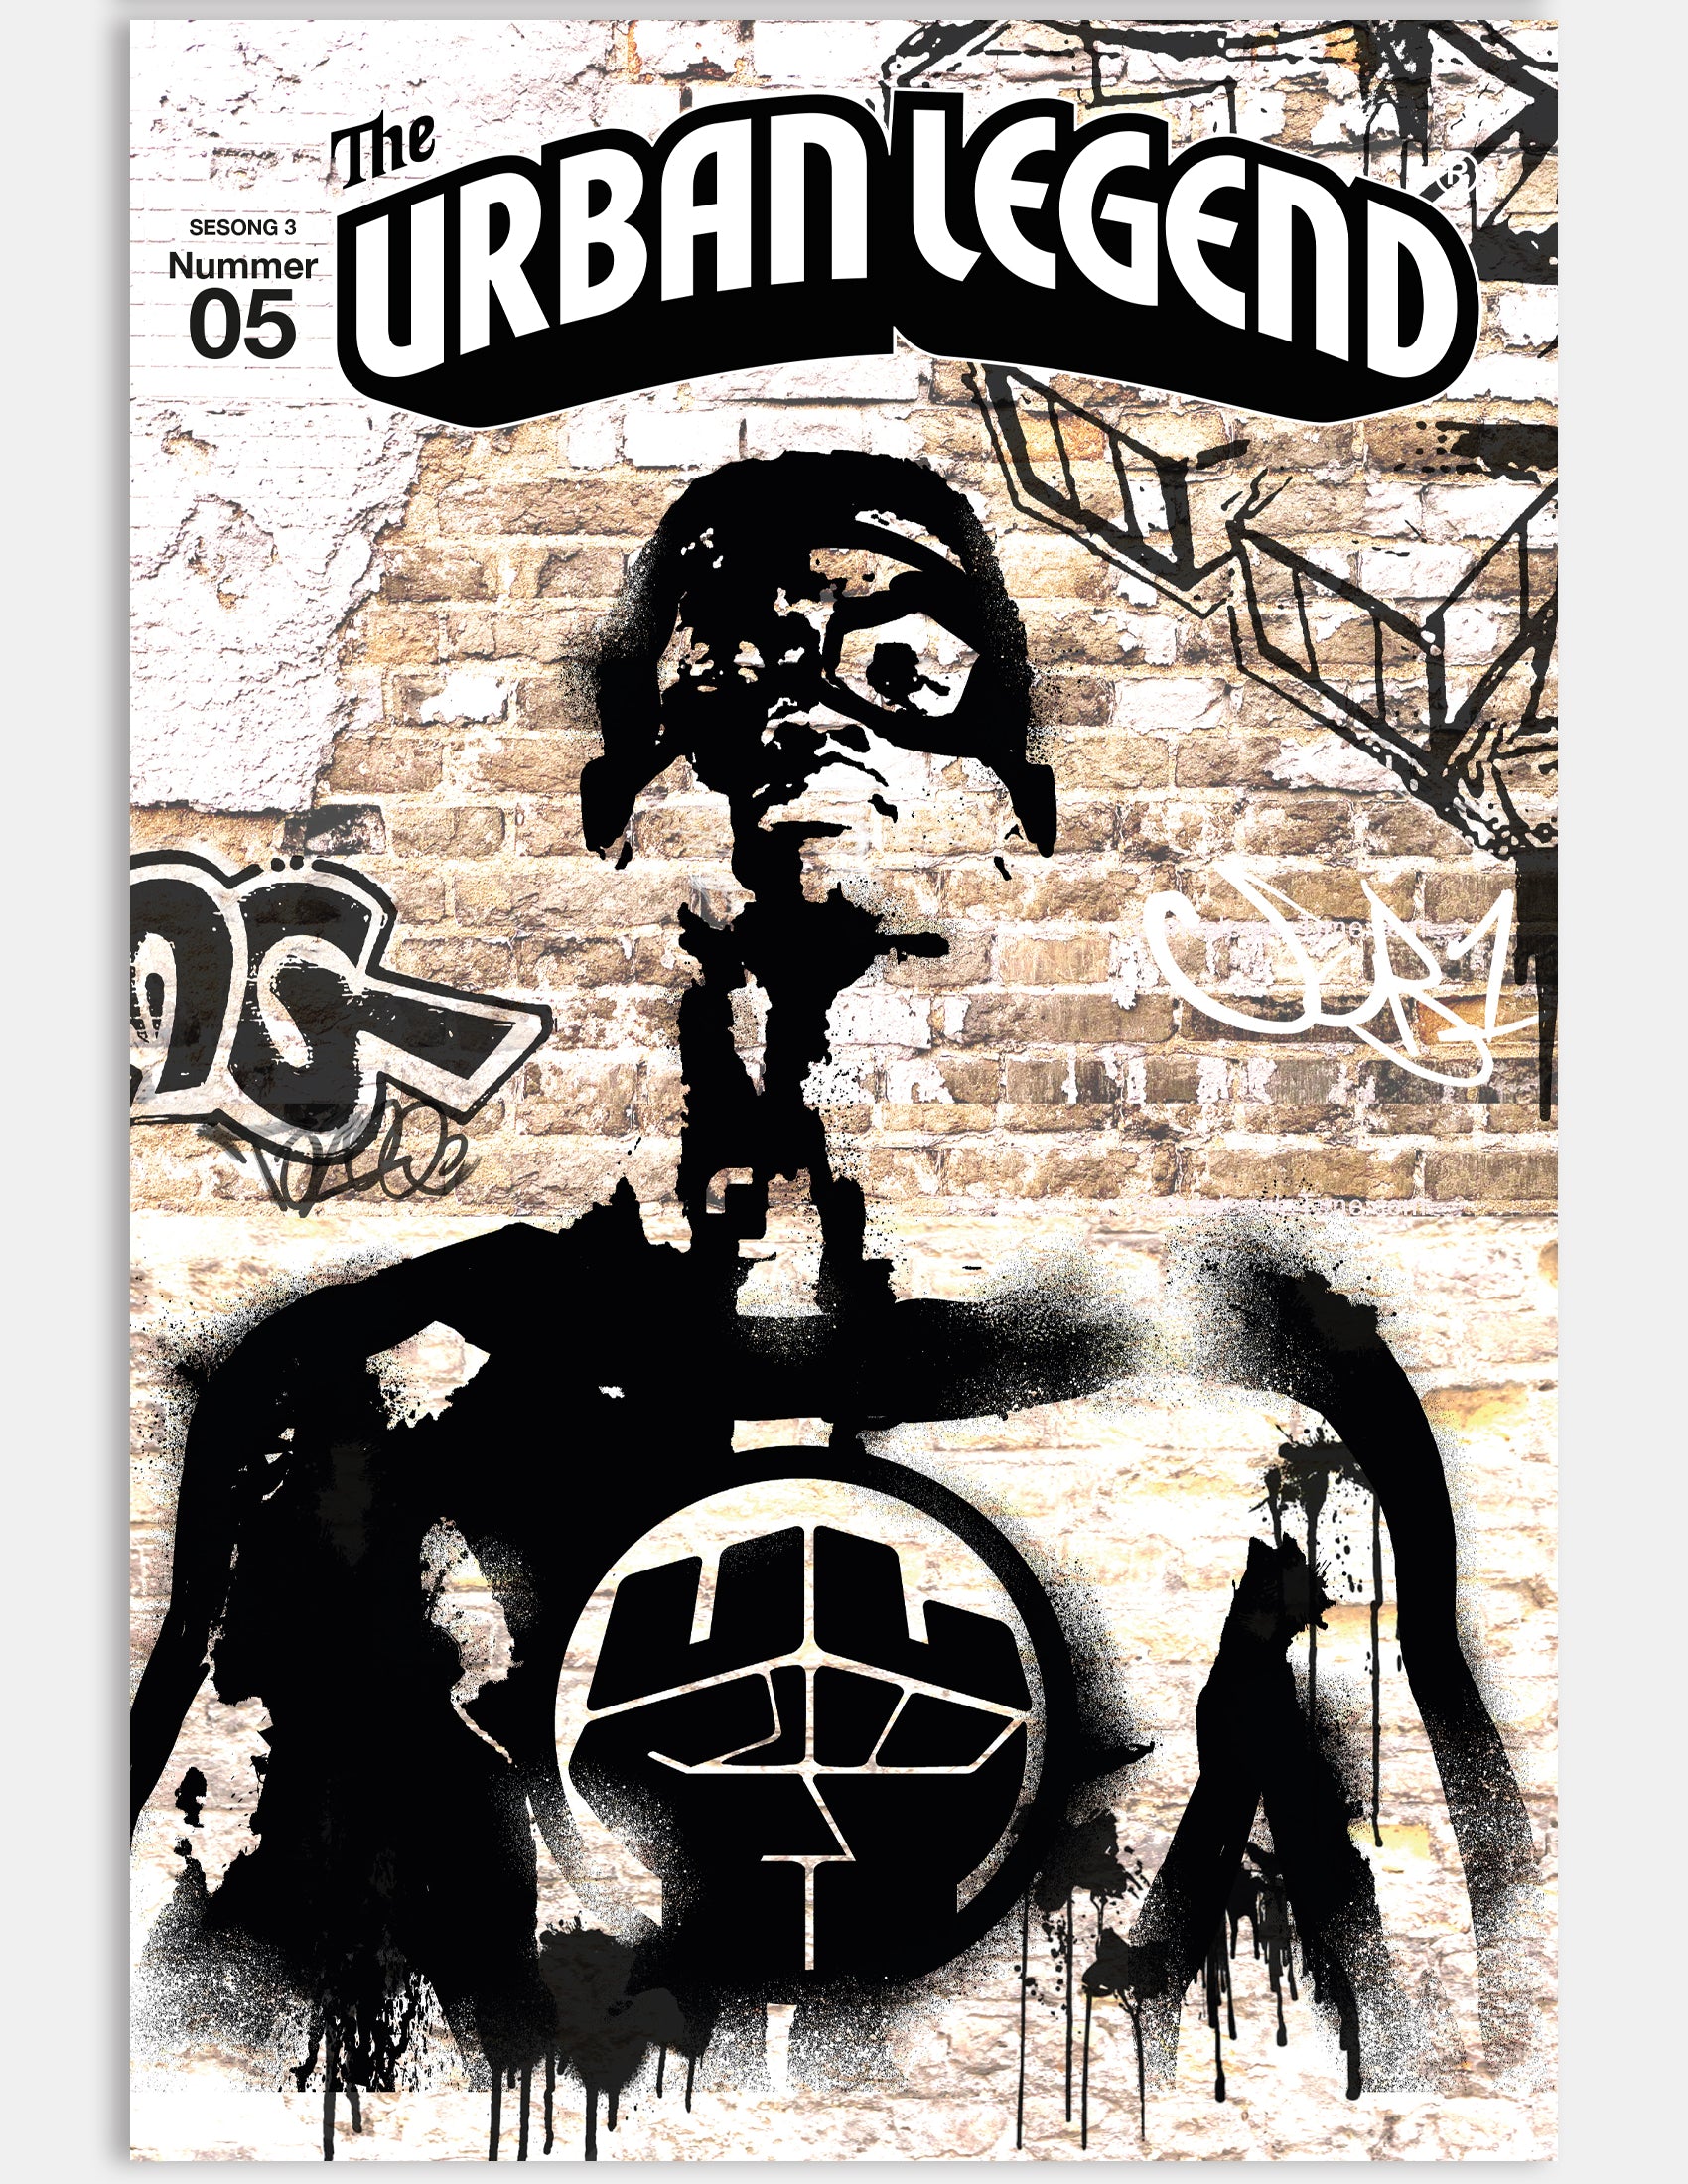 The Urban Legend - Stories (Utgave 5 - Sesong 3)